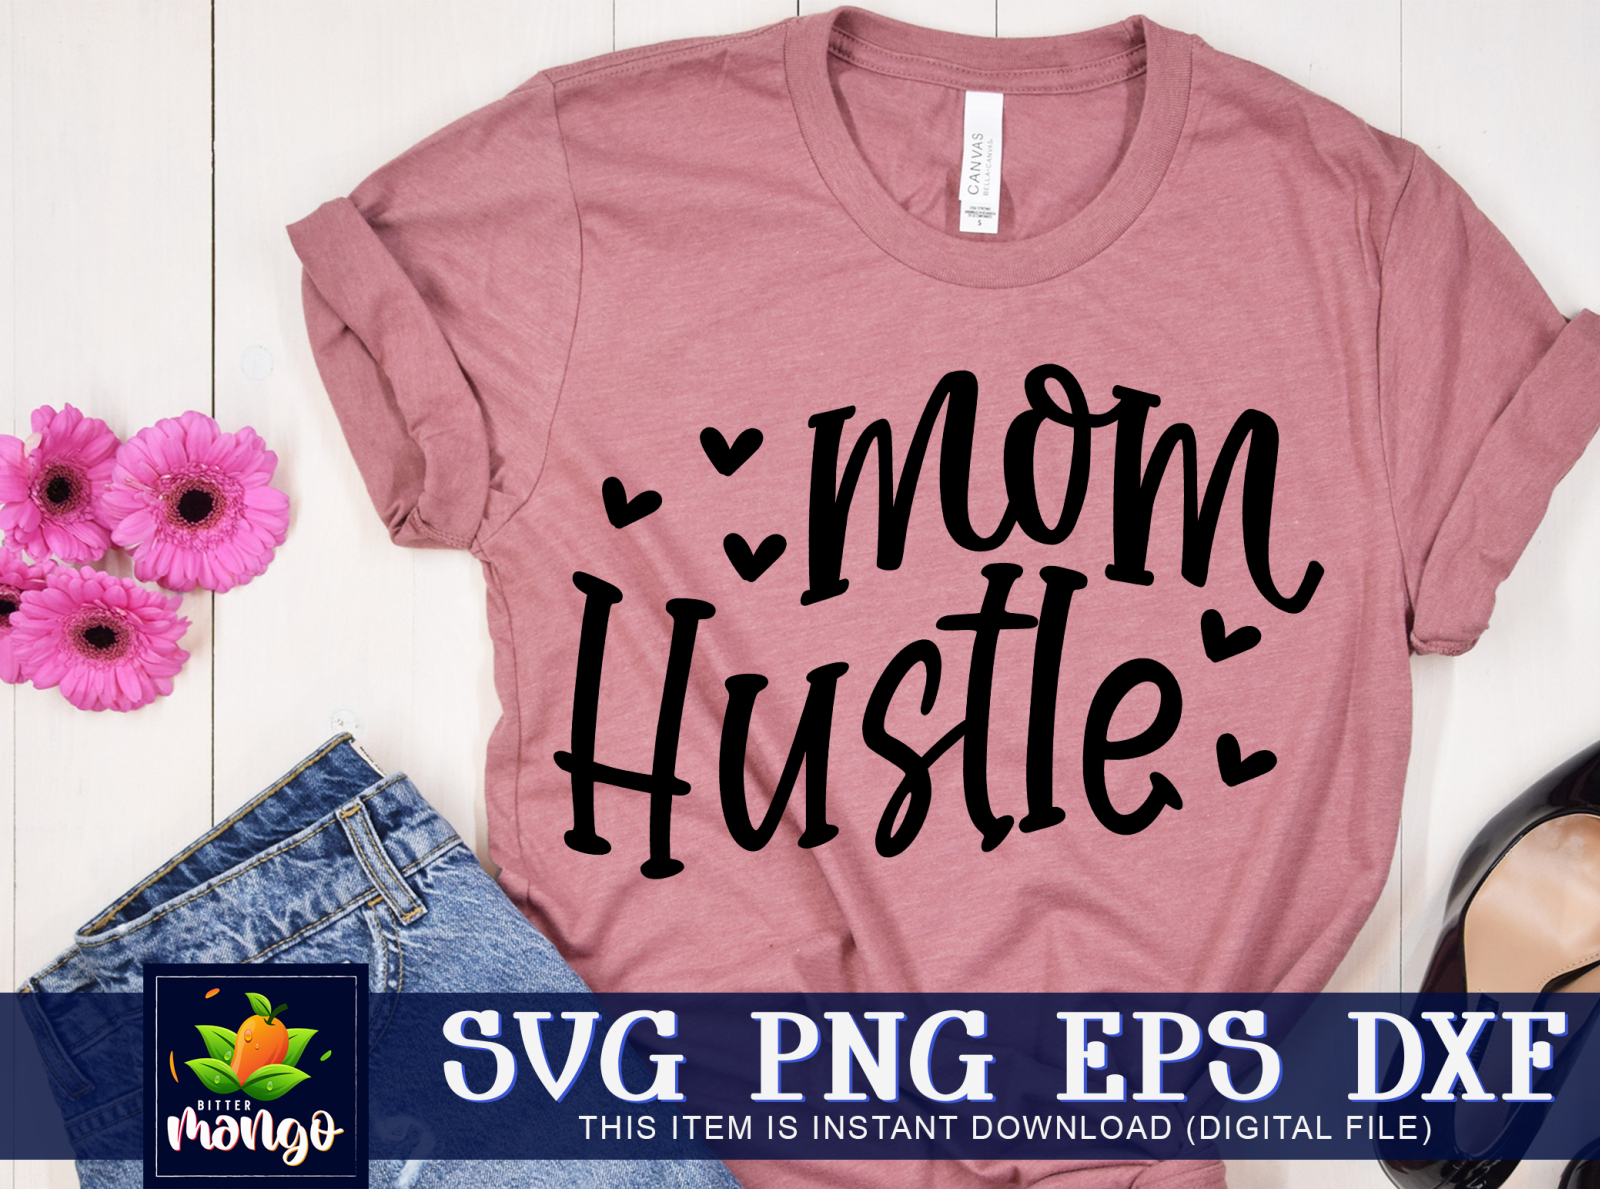 Mom hustle SVG by BITTERMANGO on Dribbble